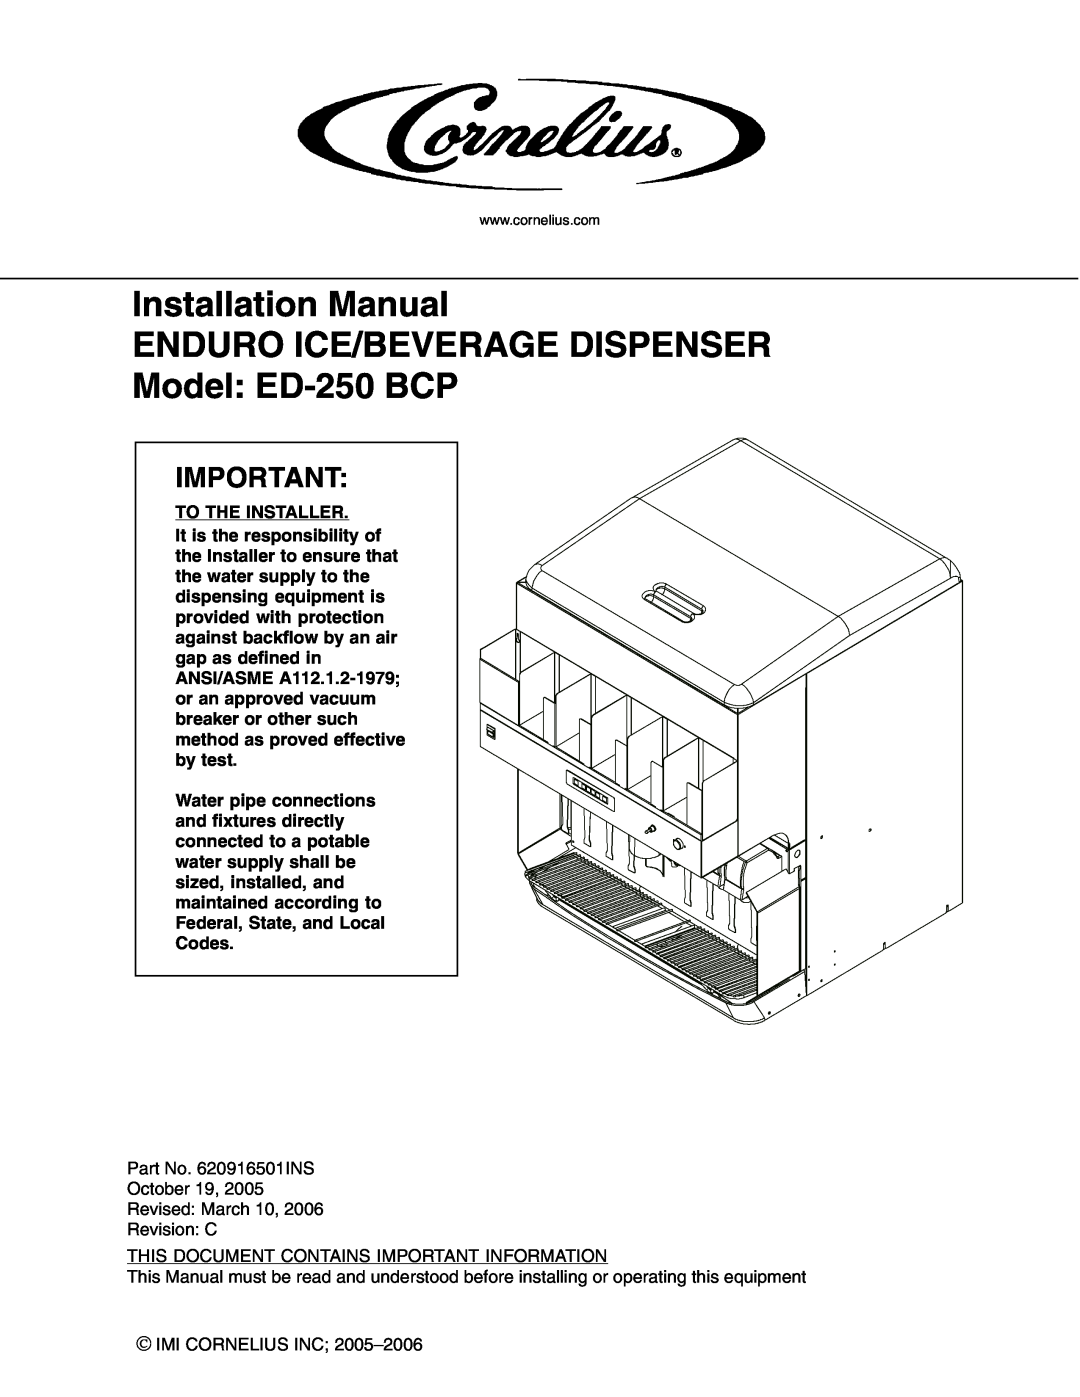 Cornelius installation manual Installation Manual ENDURO ICE/BEVERAGE DISPENSER Model ED-250 BCP 